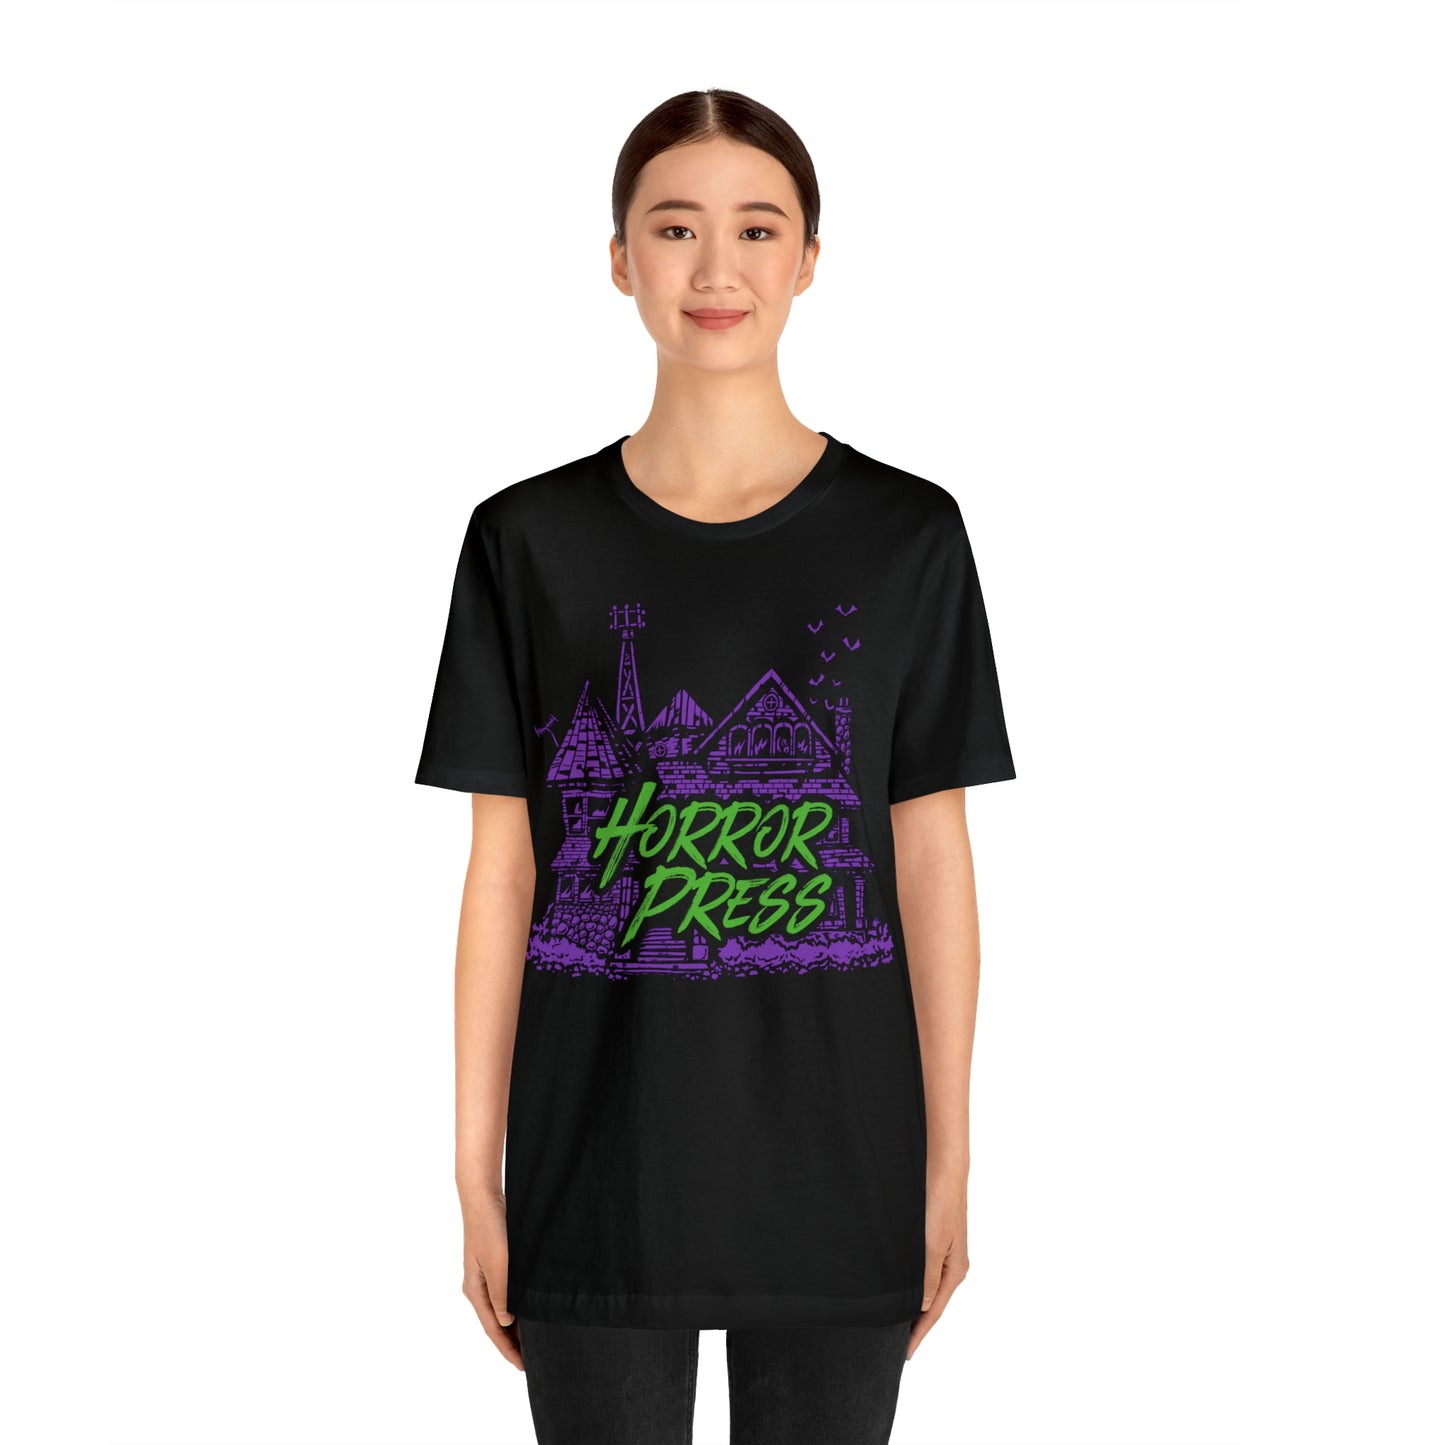 Horror Press Official T-Shirt - Horror Press Unisex Tee - Horror Movie Fan Gift  - Horror Press Horror Fan Shirt - Scary Movie Fan Shirt - Horror Game Fan Tee - Purple on Black T-Shirt